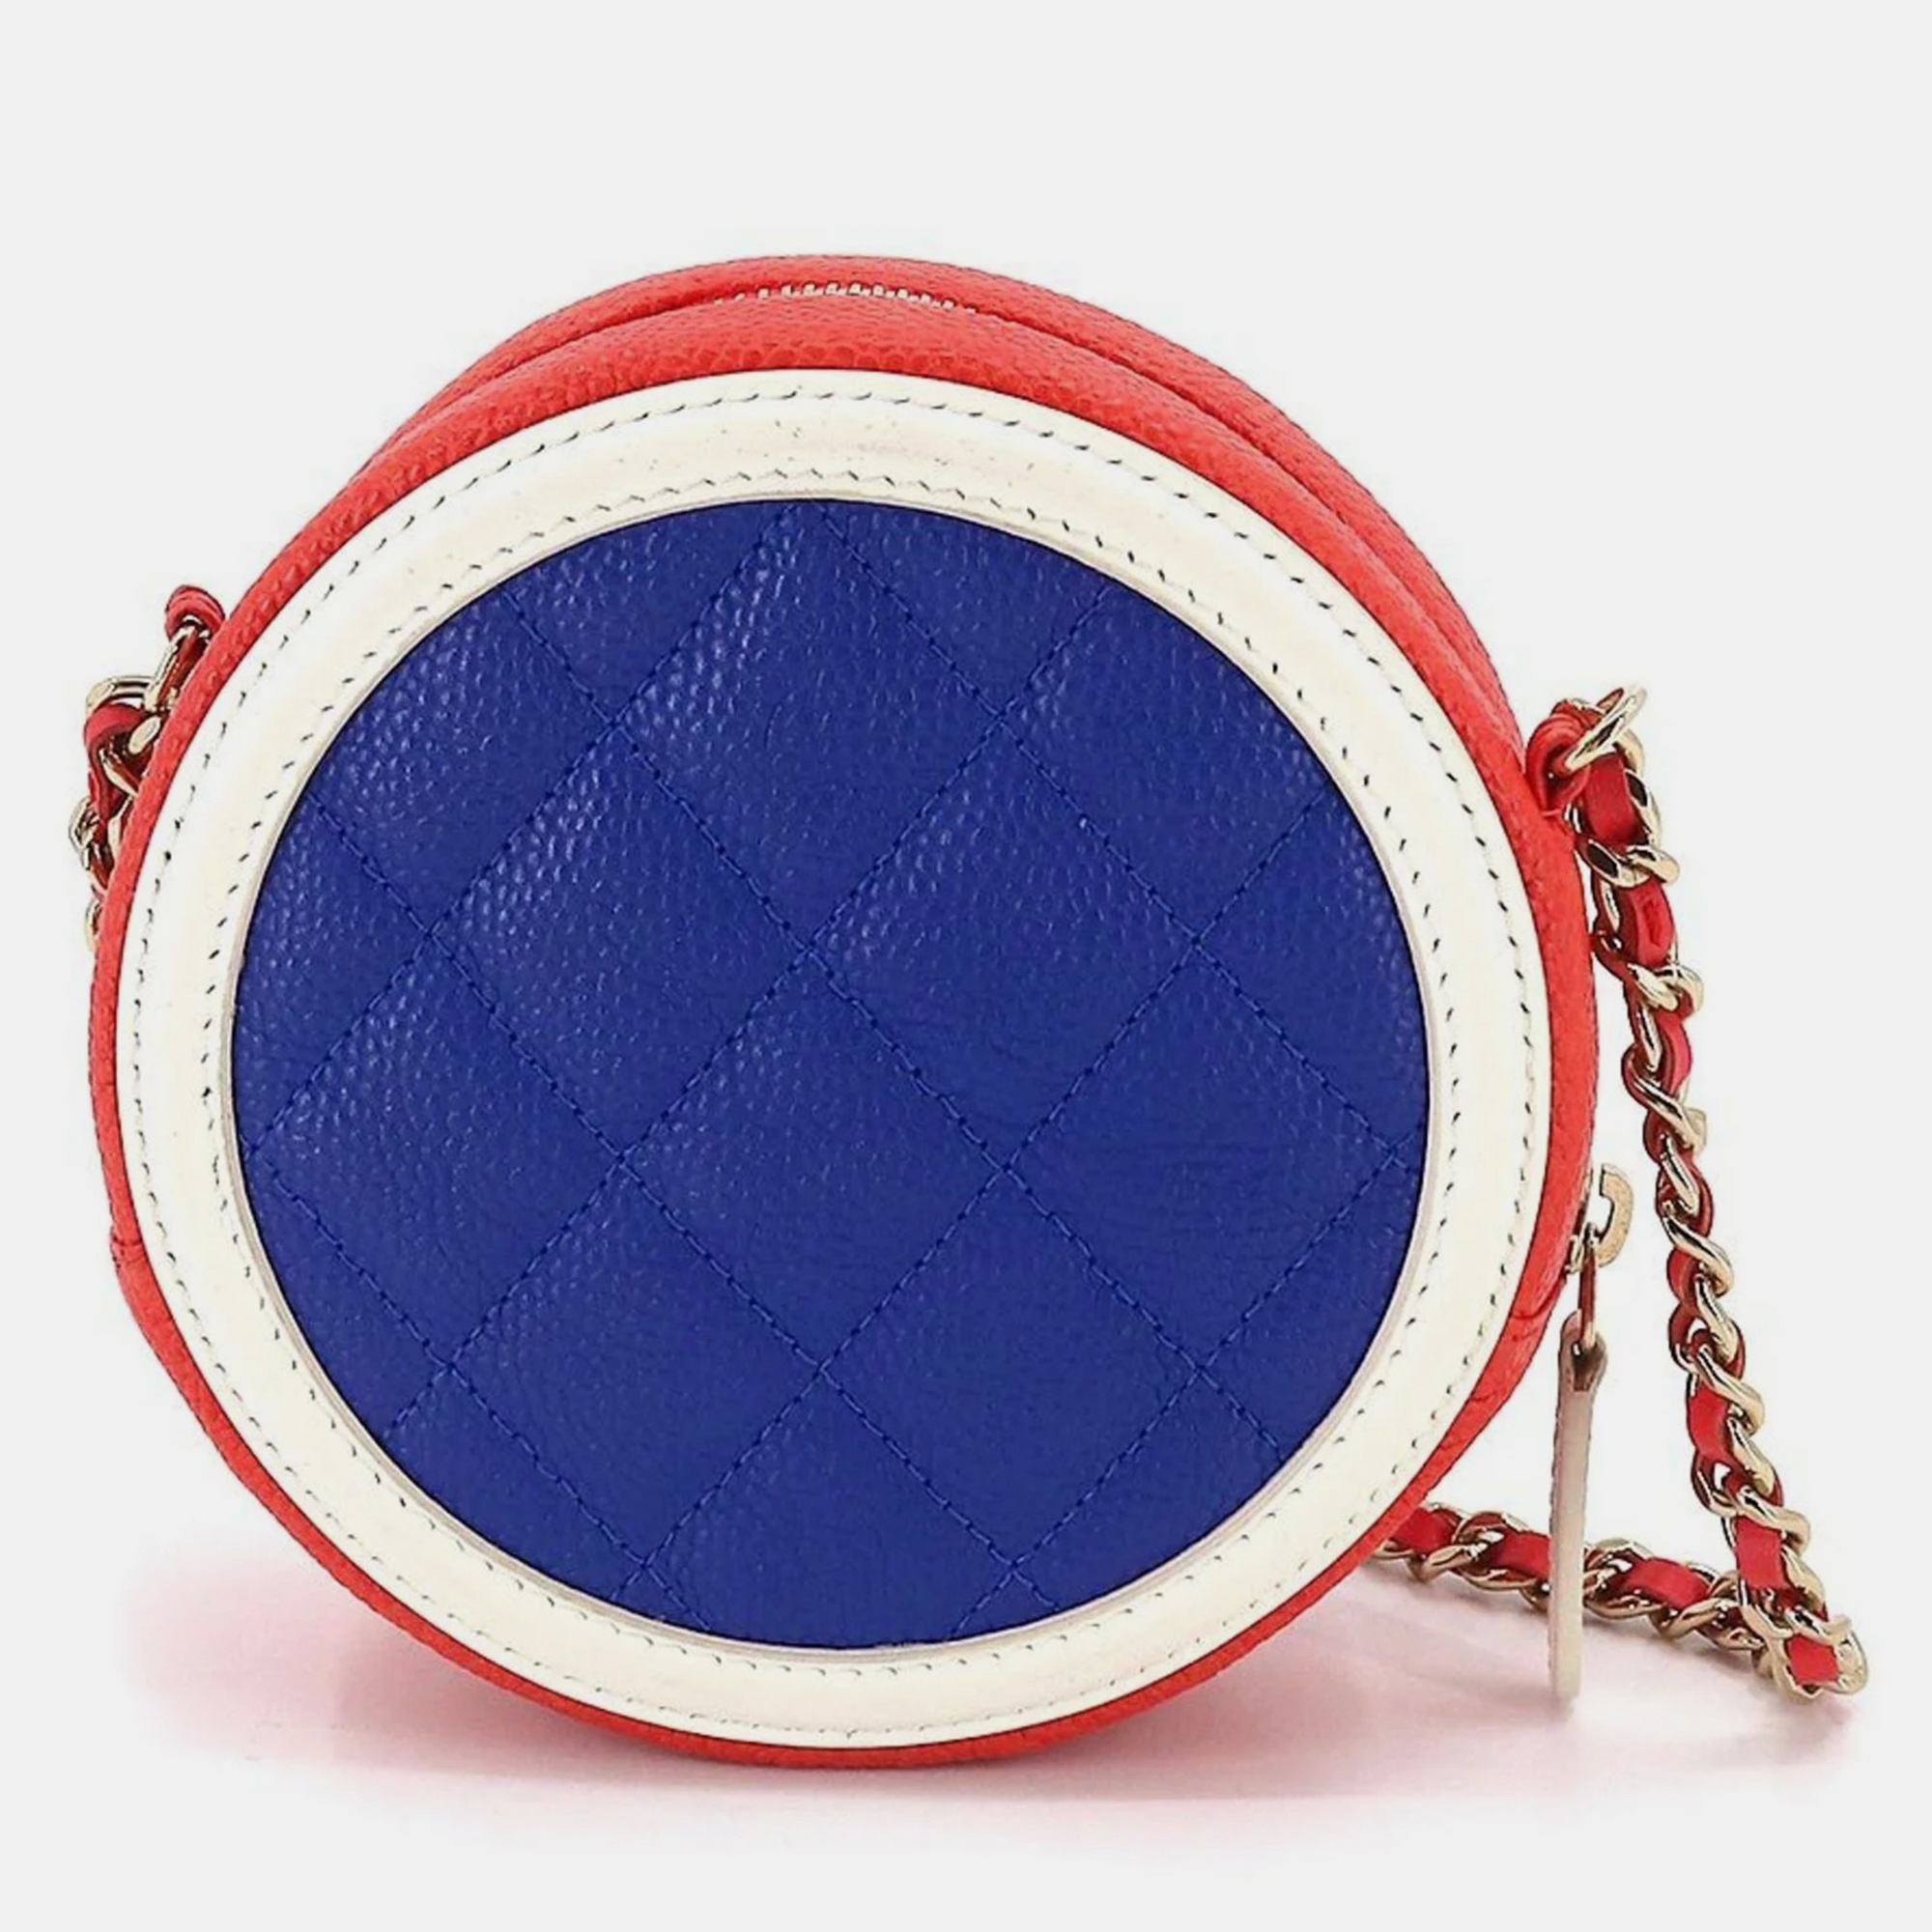 Chanel Blue Leather Filigree Round Chain Shoulder Bag